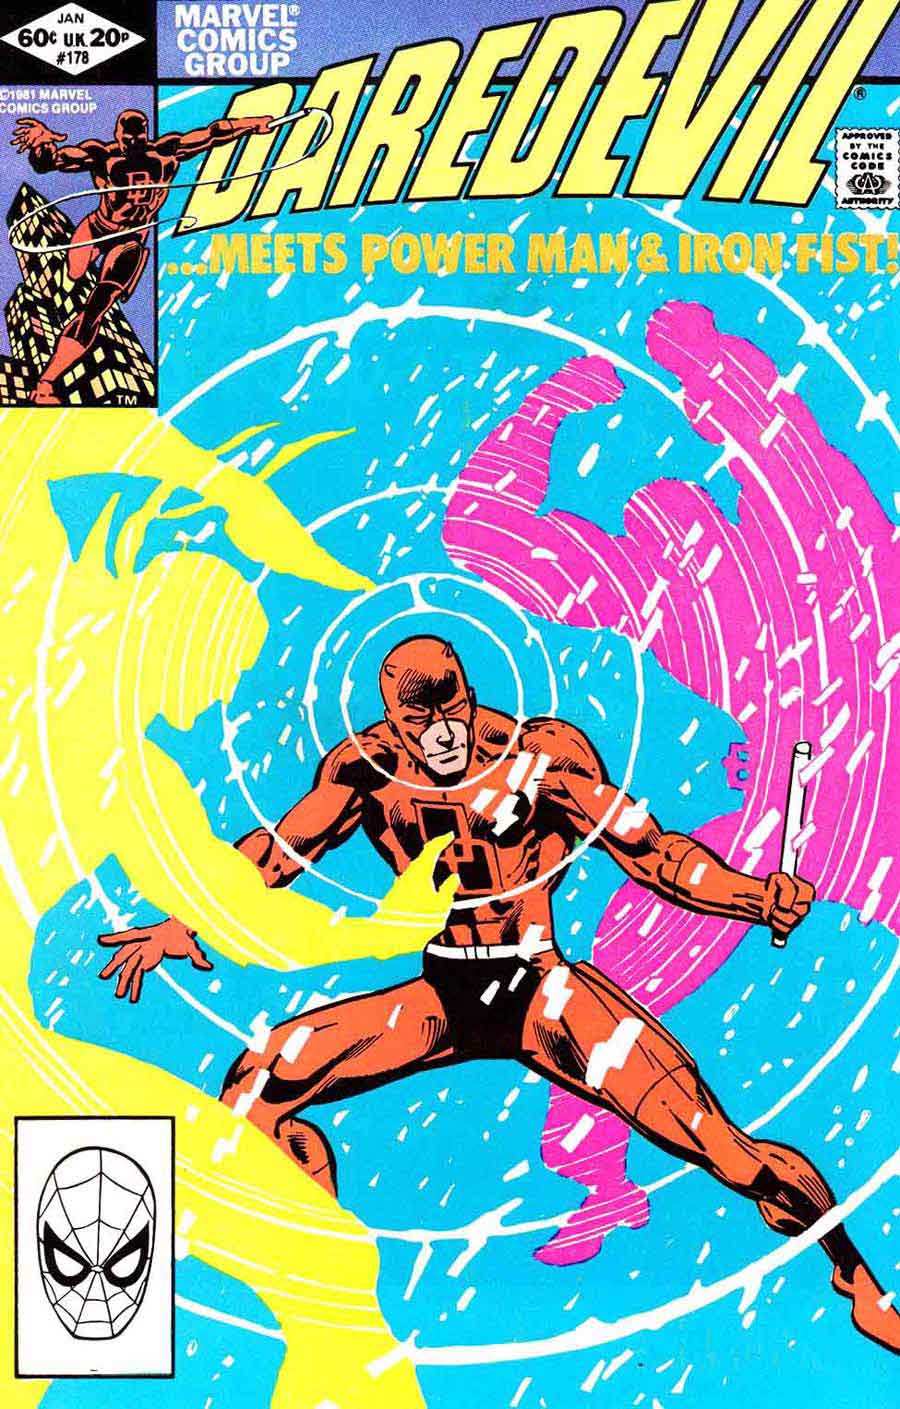 Daredevil v1 #178 marvel comic book cover art by Frank Miller